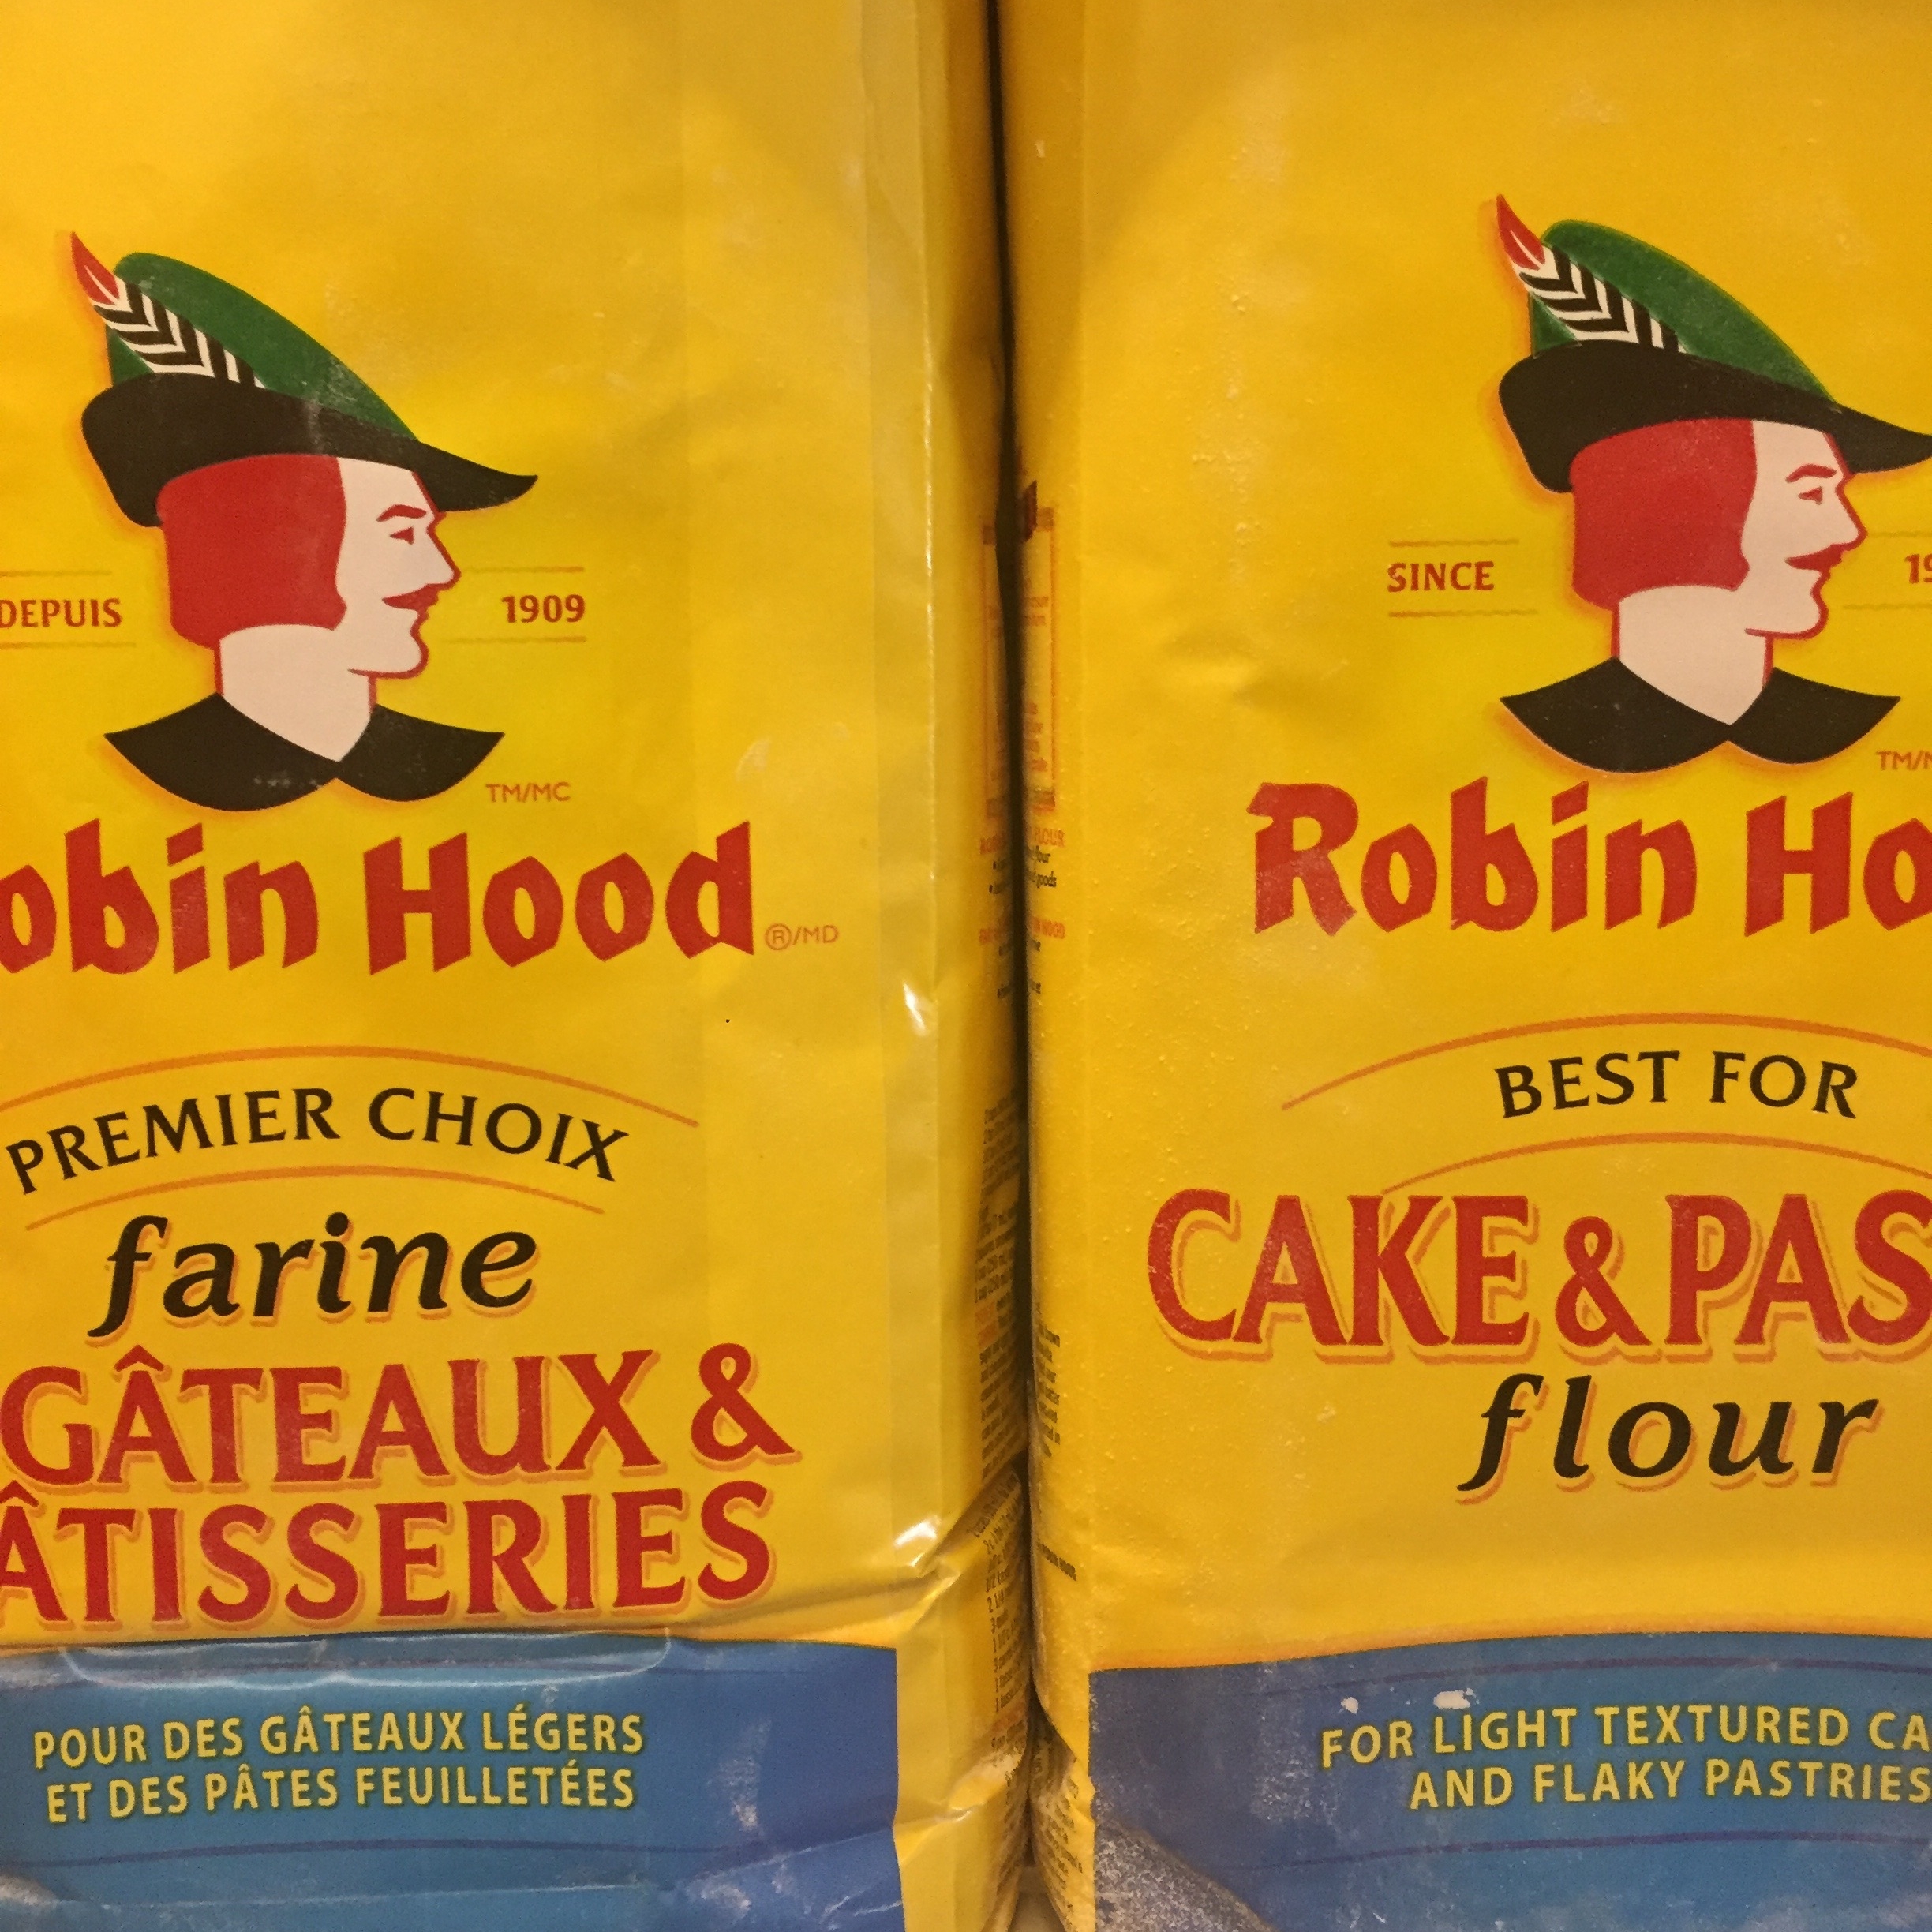 Cake & Pastry Flour:  7 - 10% Protein